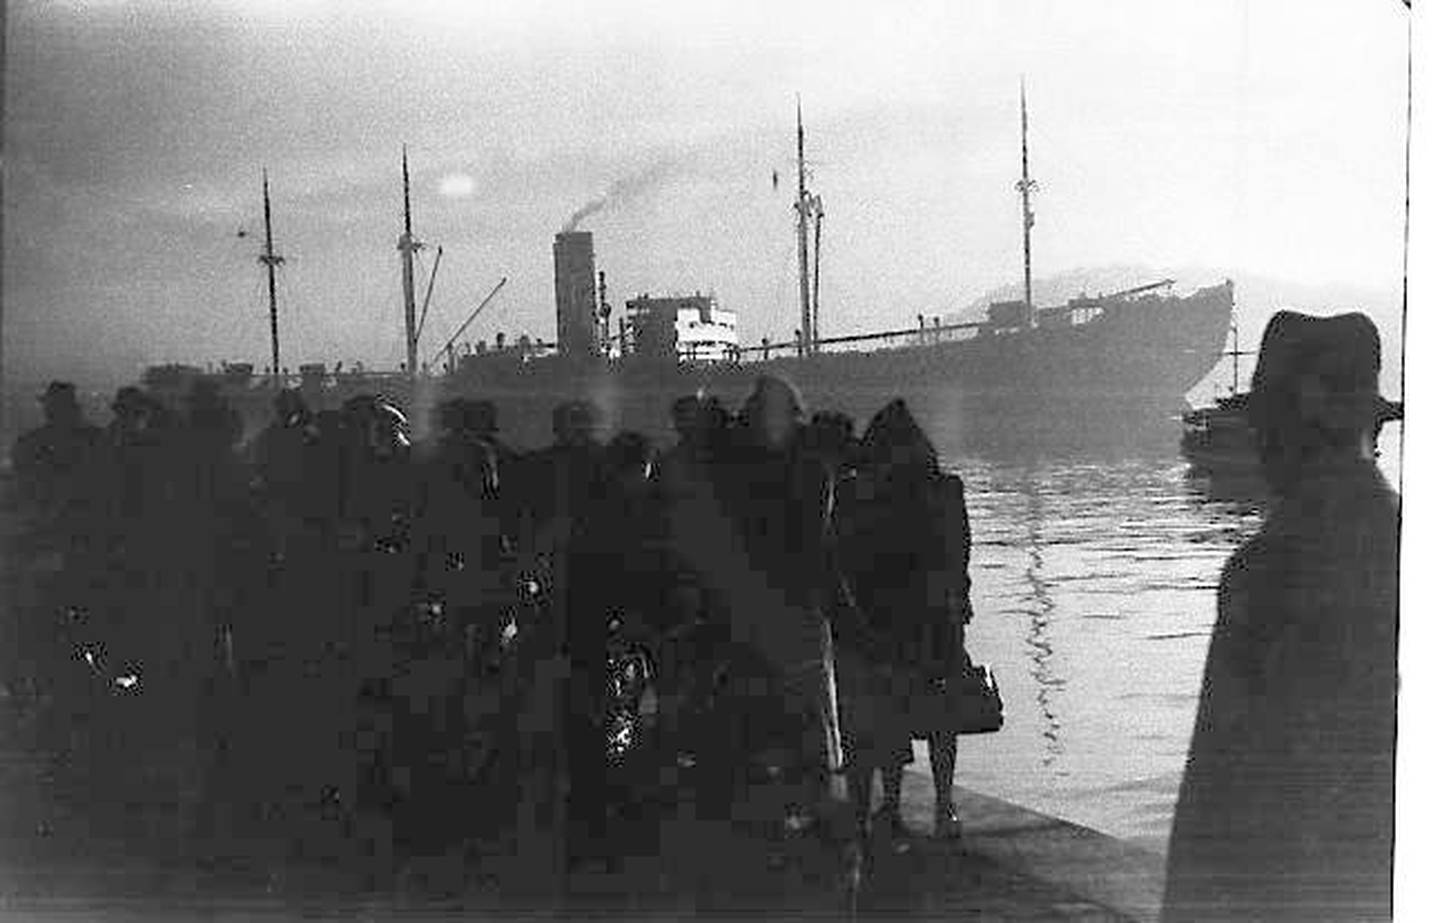 Skipet Donau tok 26. november 1942 530 norske jøder til utryddelsesleirene. 767 ble
deportert. Kun 30 overlevde. FOTO: GEORG W. FOSSUM/NTB SCANPIX